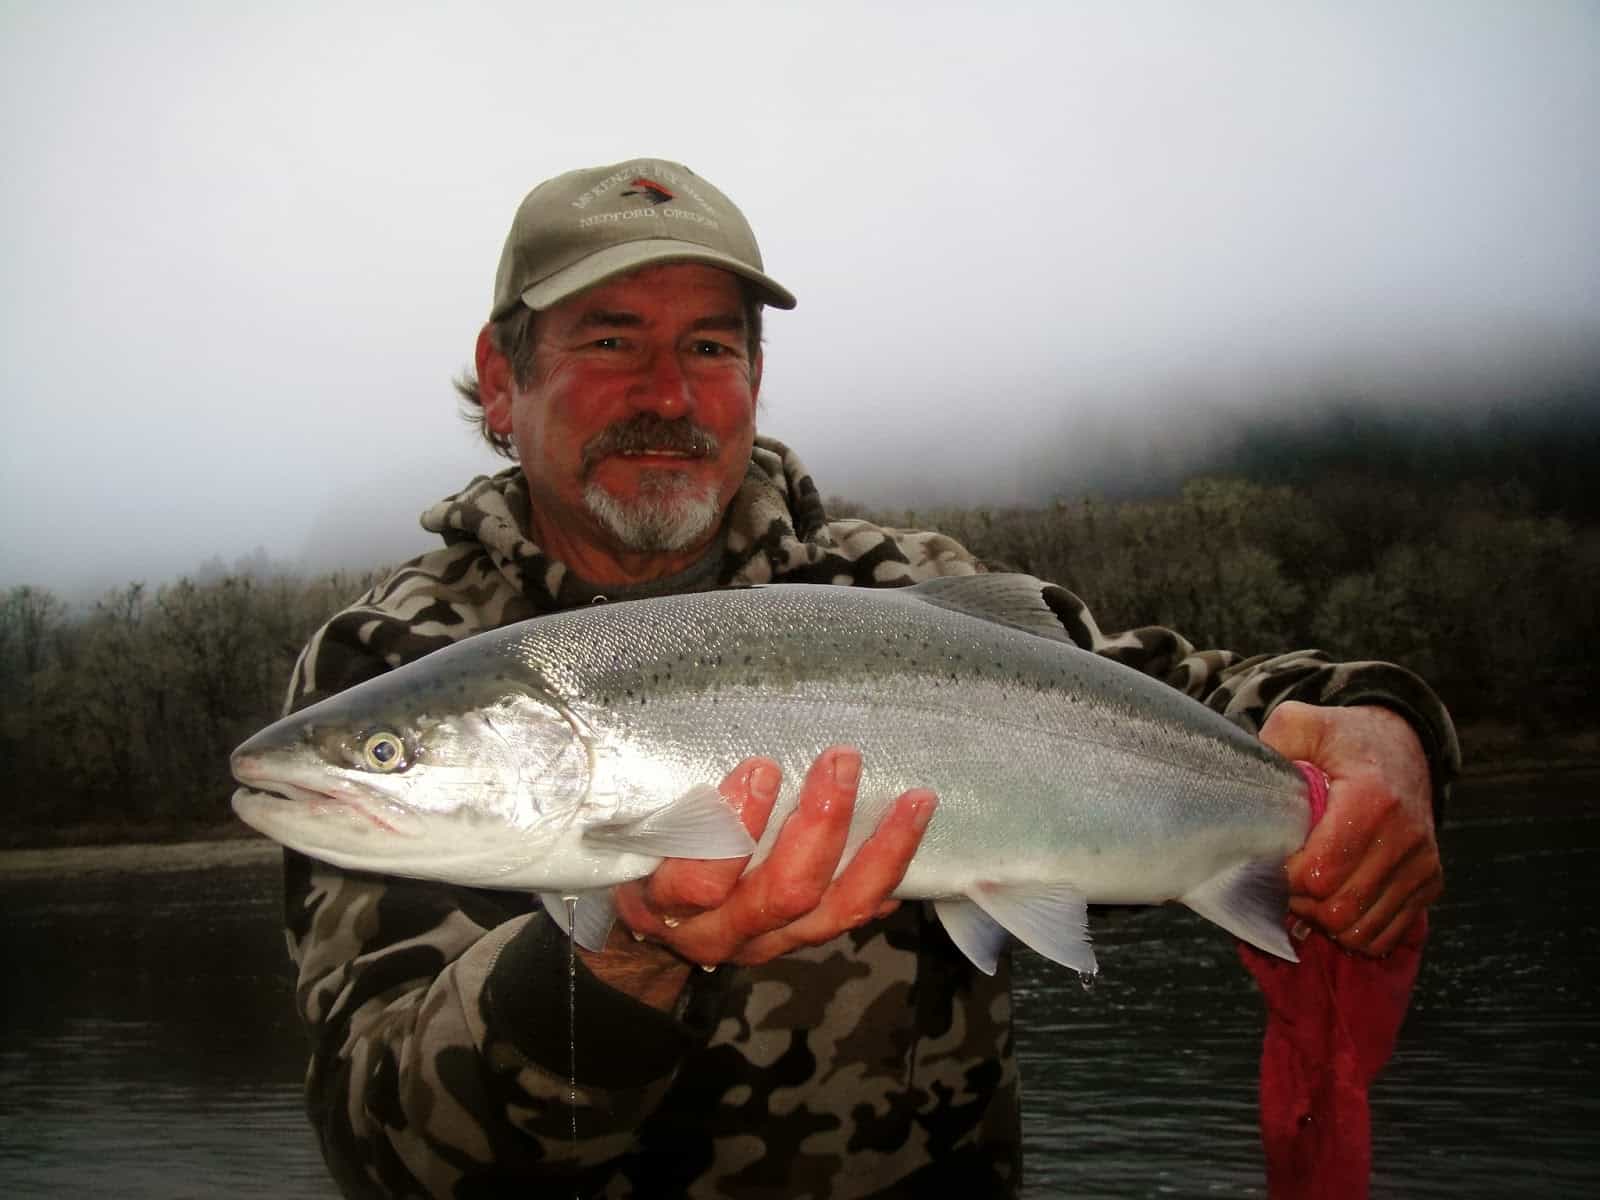 Chrome bright Umpqua winter steelhead held by Fred on a guided fishing trip.